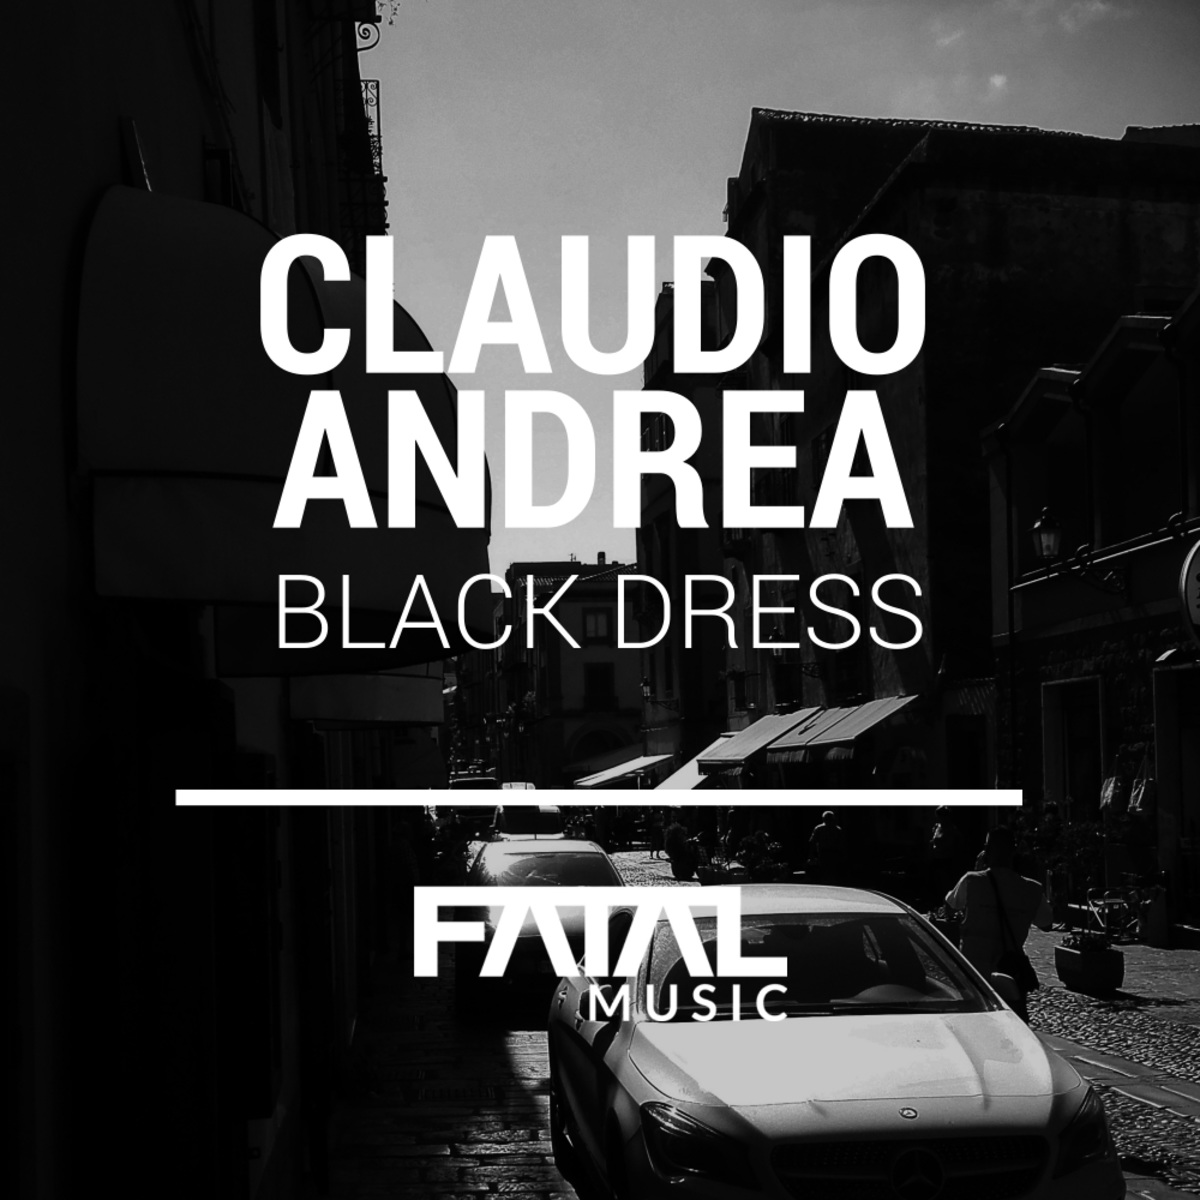 Claudio Andrea - Black Dress / Fatal Music